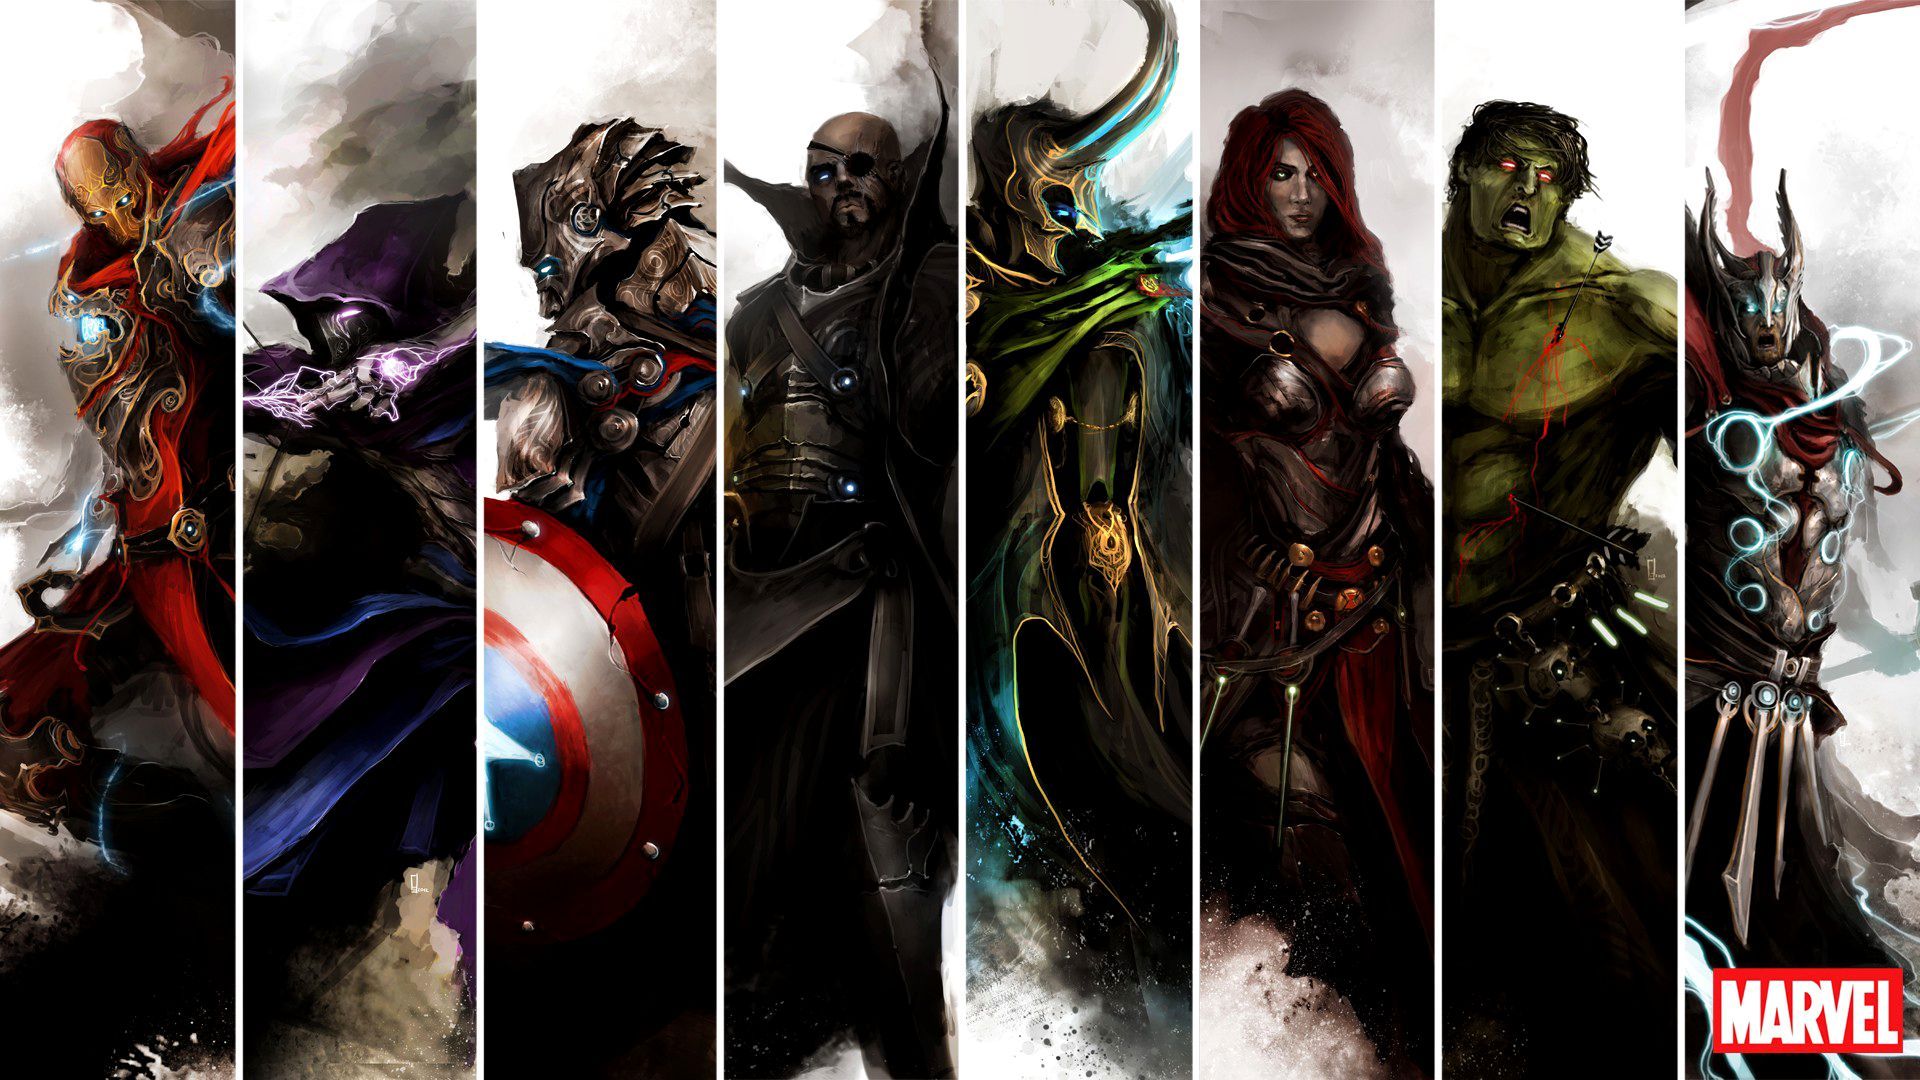 The Avengers Black Widow wallgem Free Download 4k Wallpaper